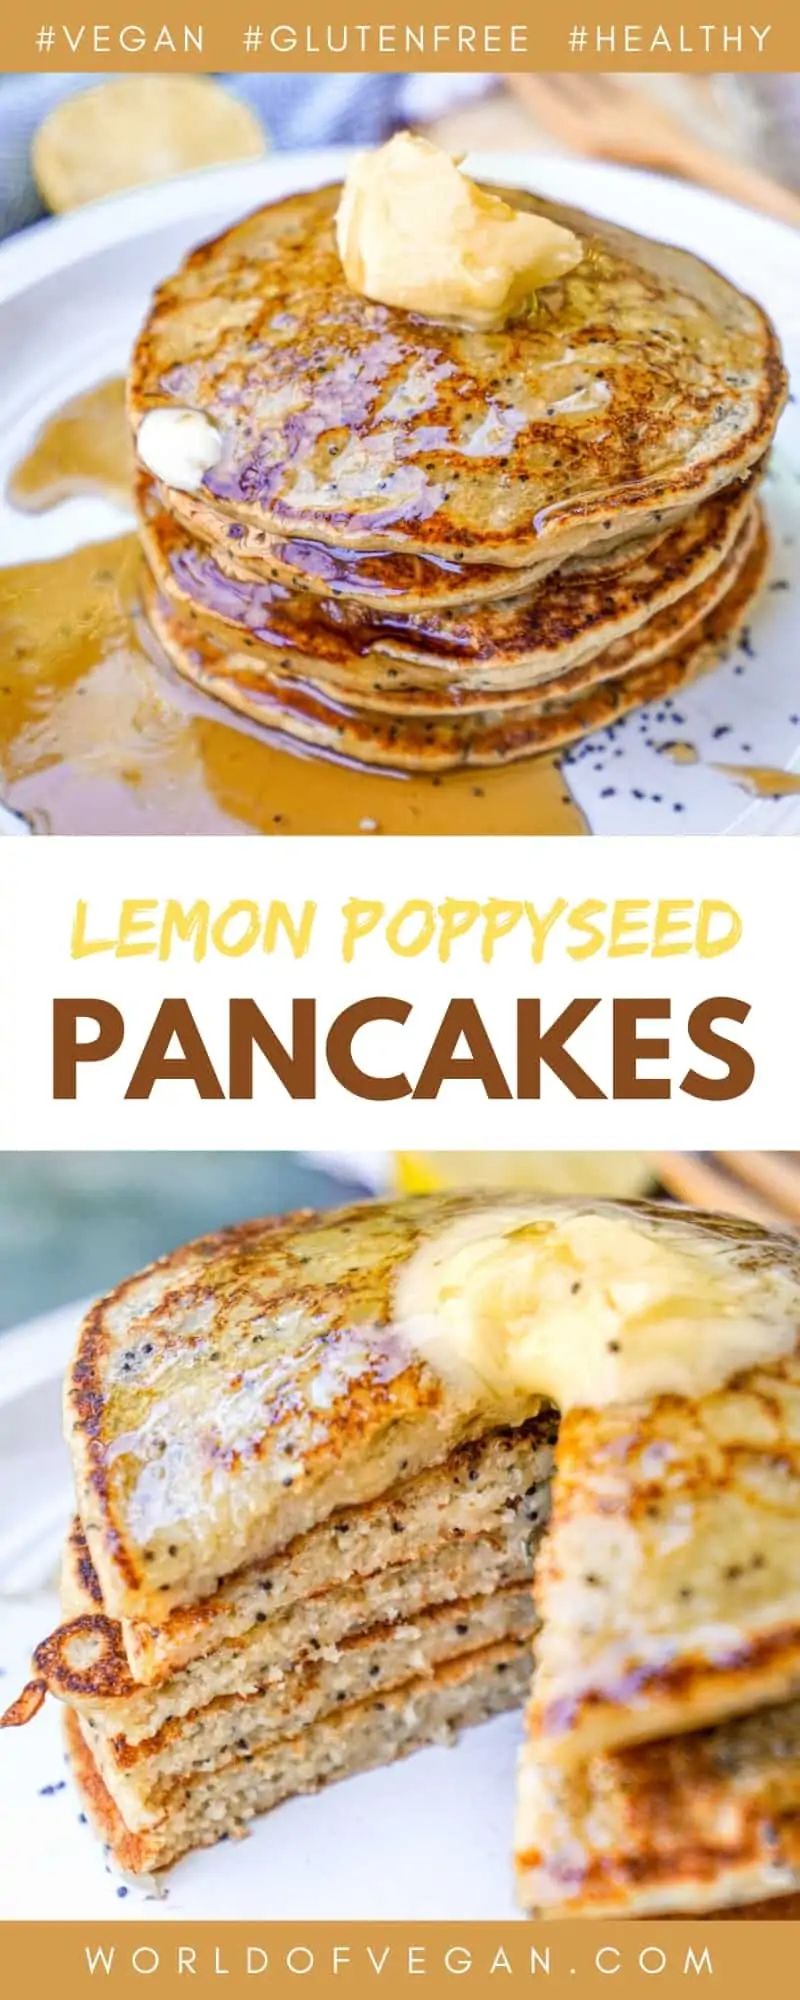 Vegan Lemon Poppyseed Pancakes Pinterest Graphic 